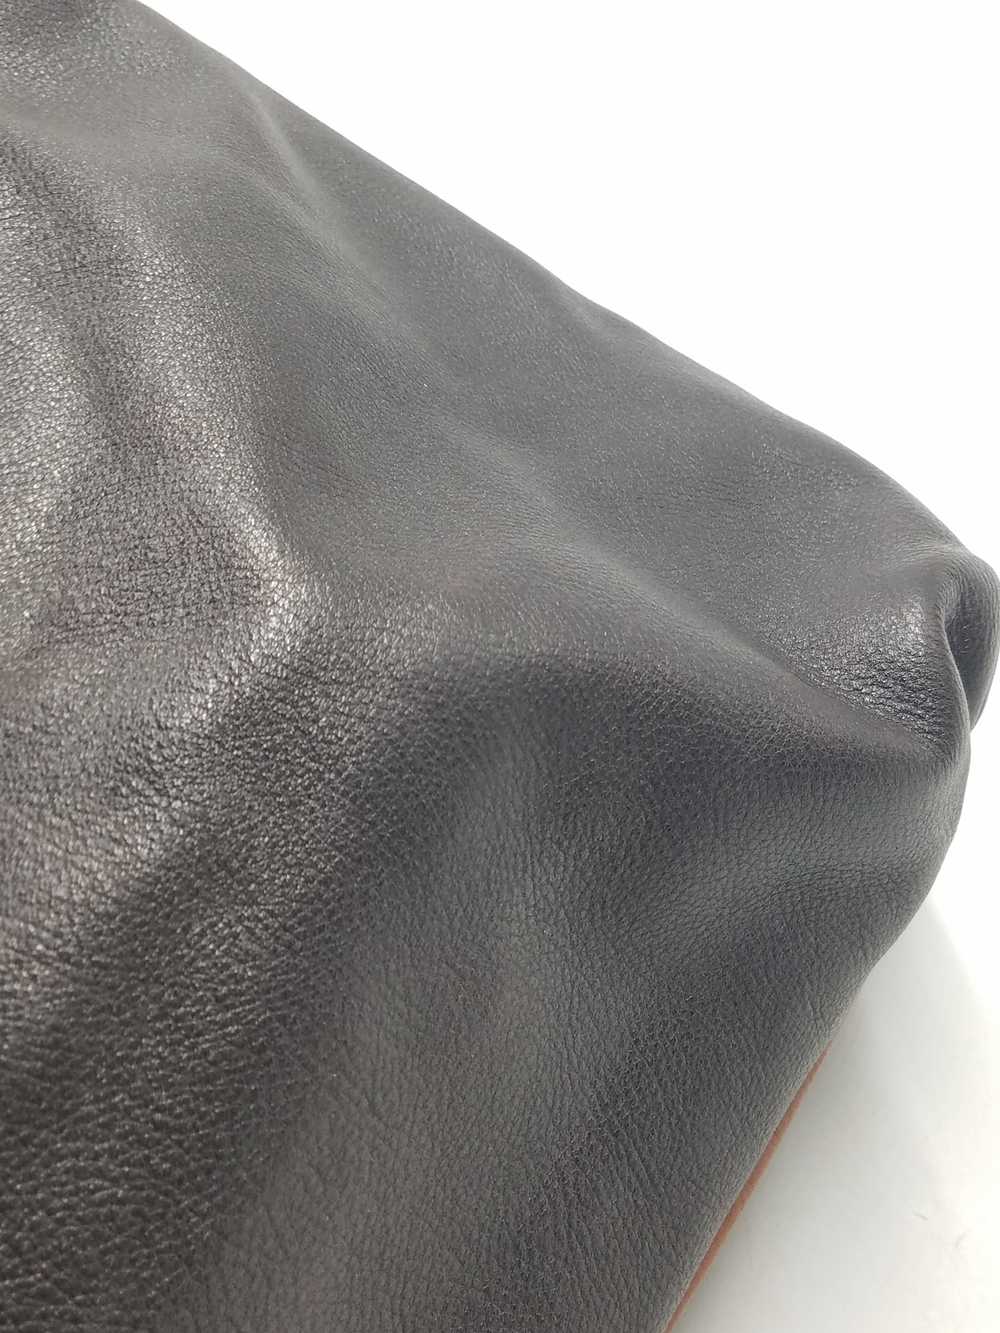 Authentic Giorgio Armani Dark Brown XL Hobo Bag - image 8